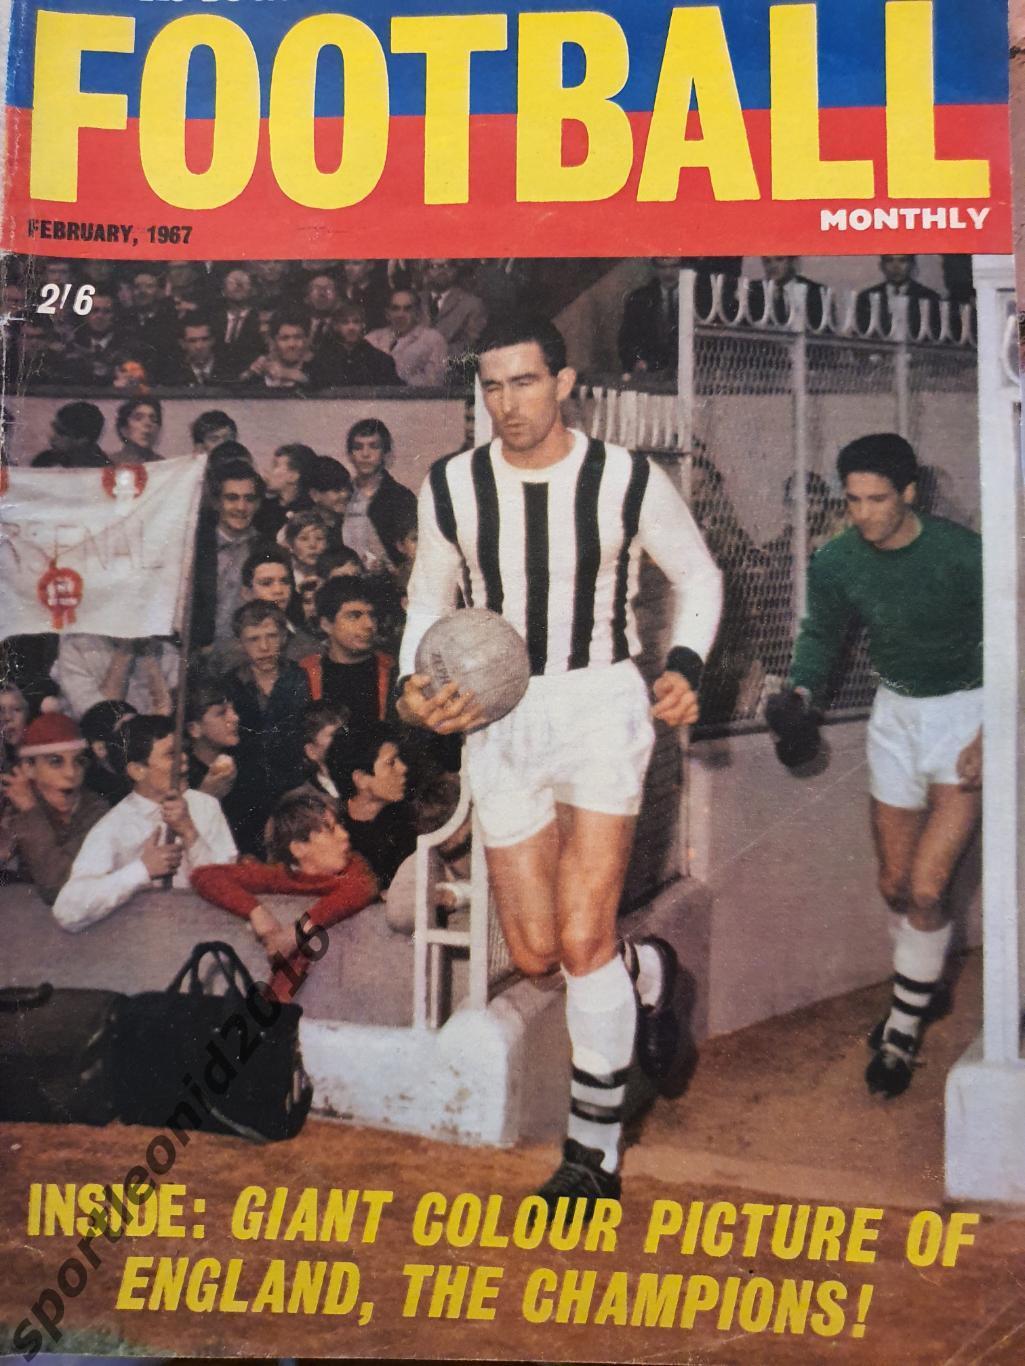 Football Monthly Charles Buchans's 1967 8 выпусков.2 5